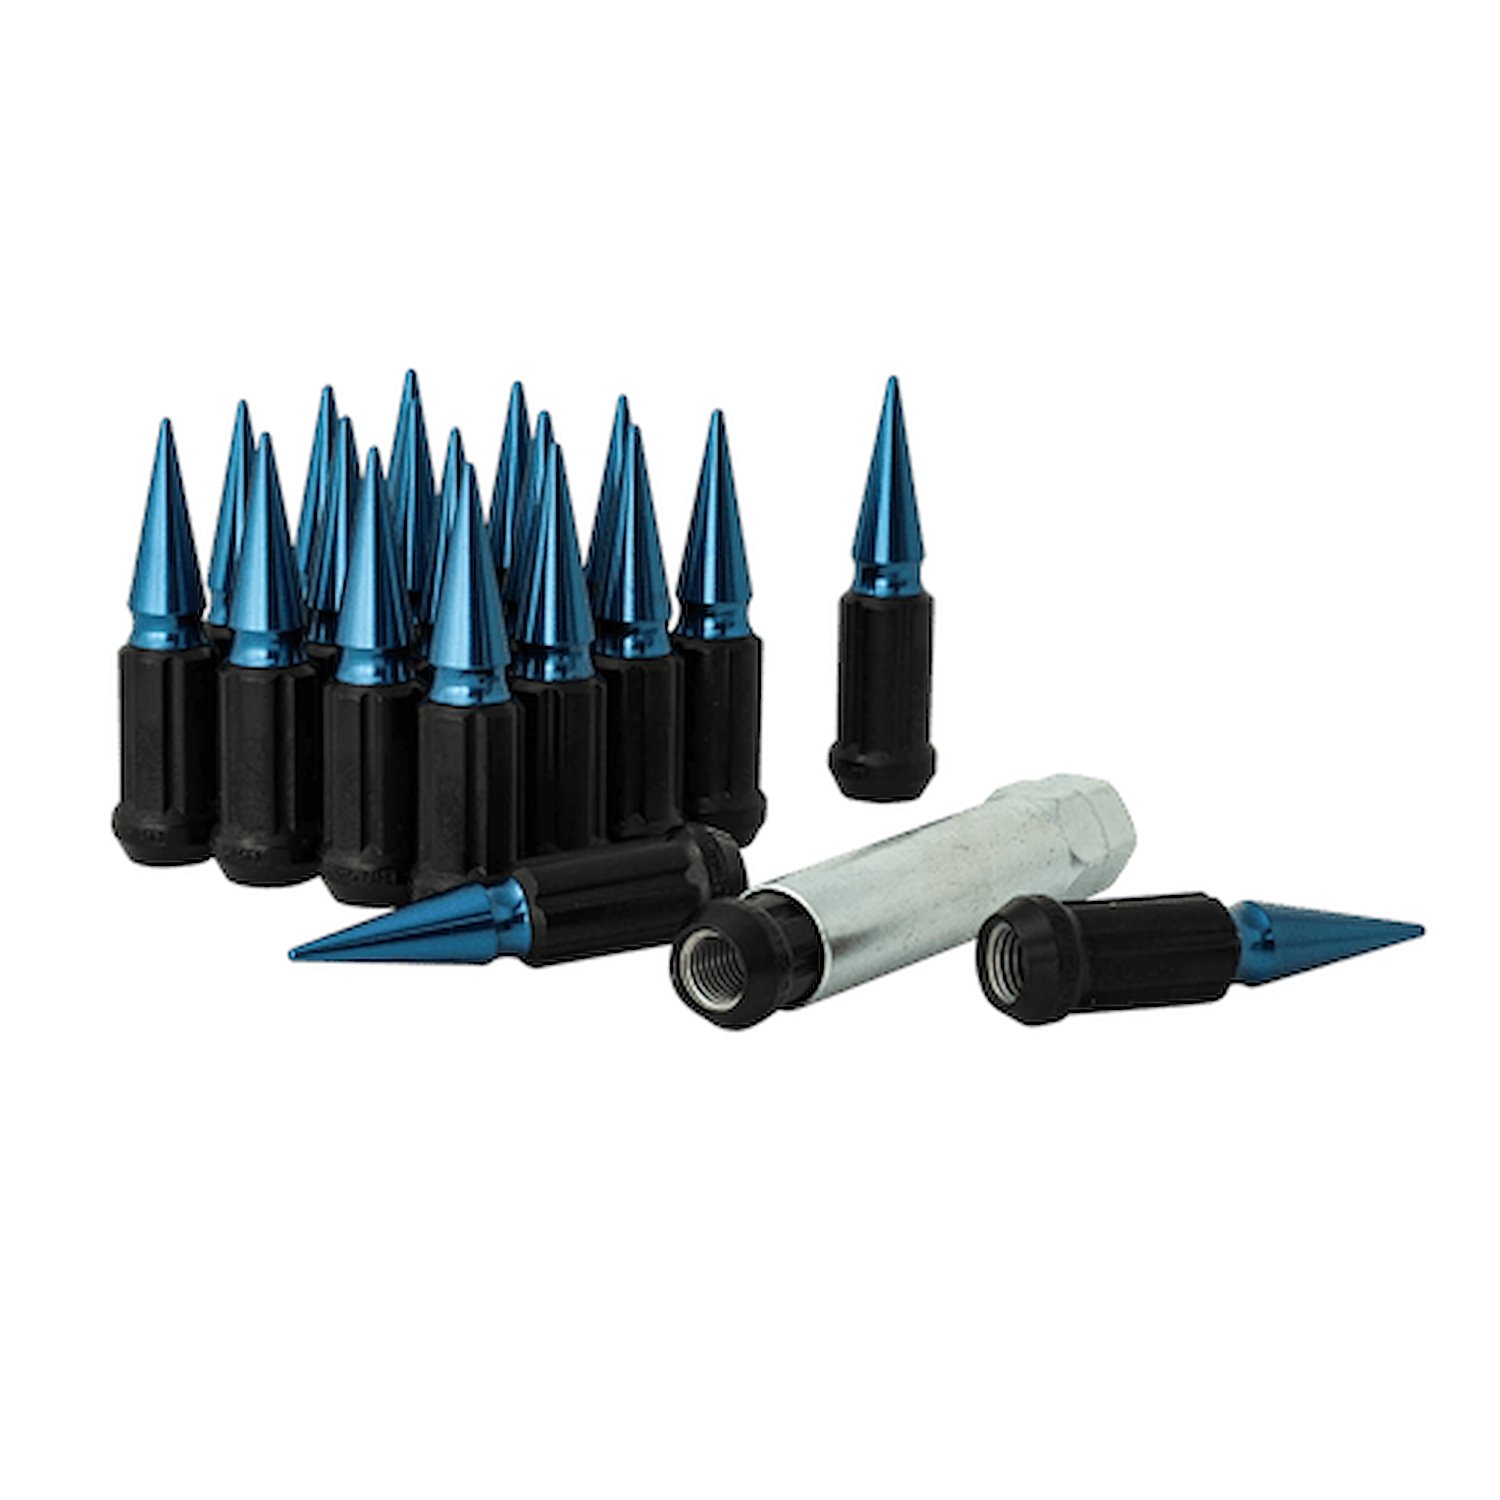 SSPK5-12150BL 5-Lug 12 mm x 1.50 Short Spike Kit, Blue